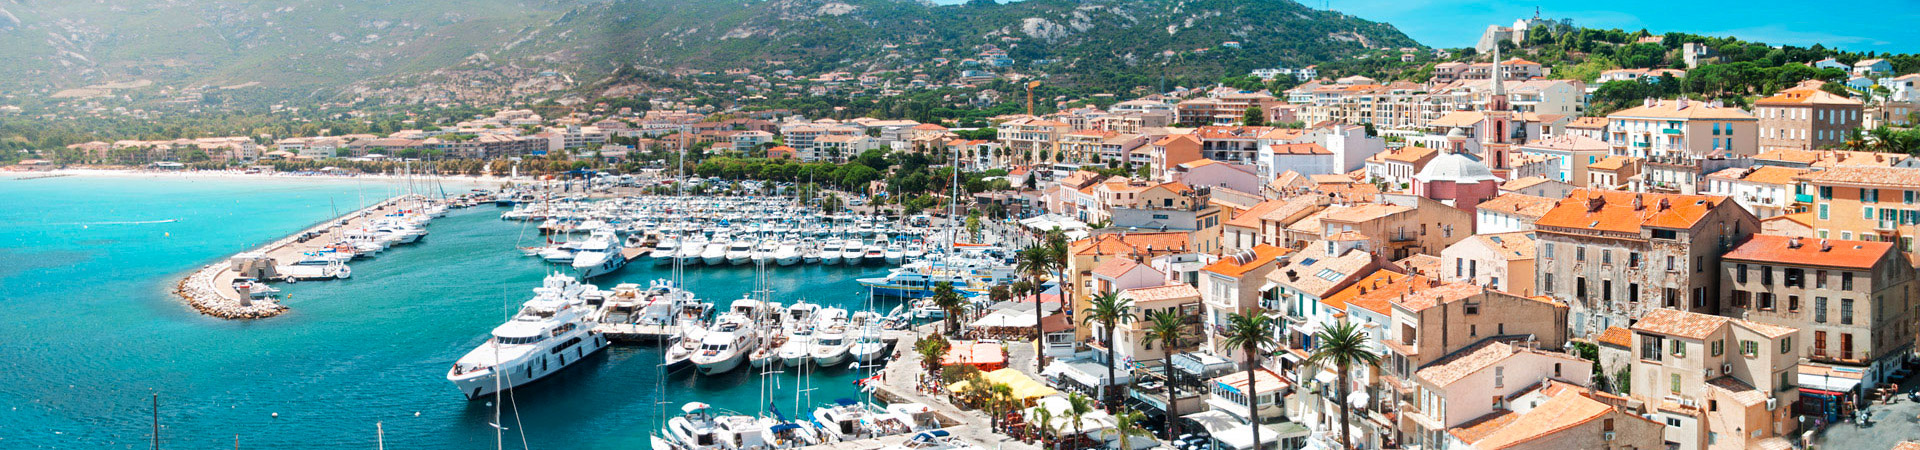 Location Vacances Corse